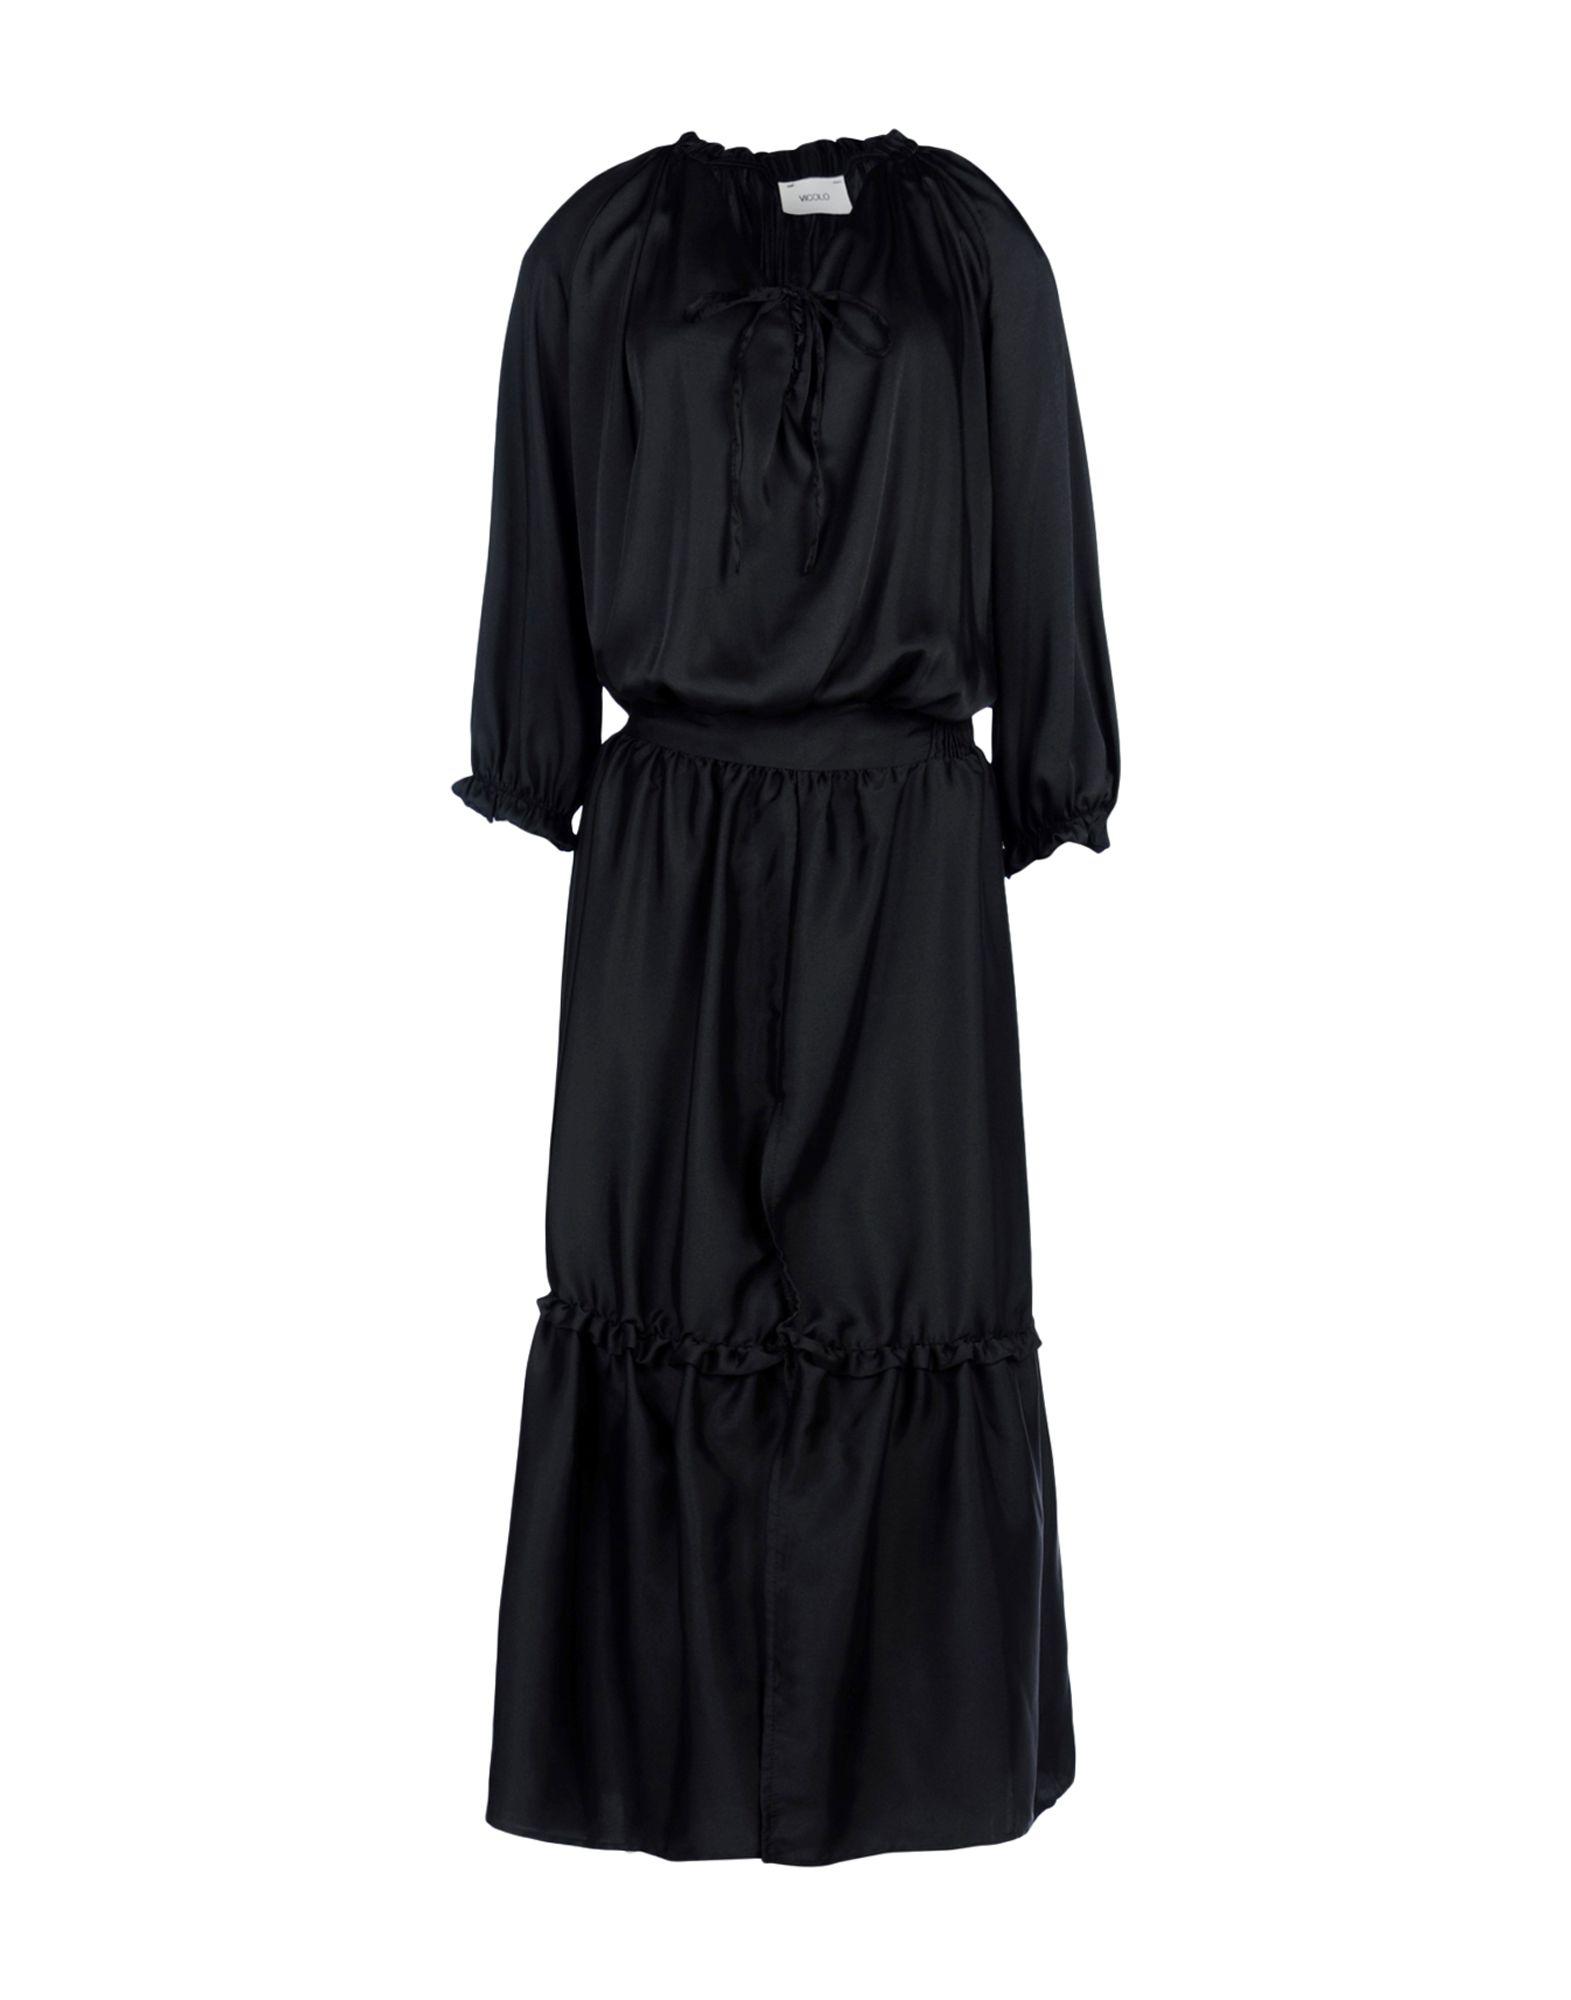 ViCOLO Satin Long Dress in Black - Lyst